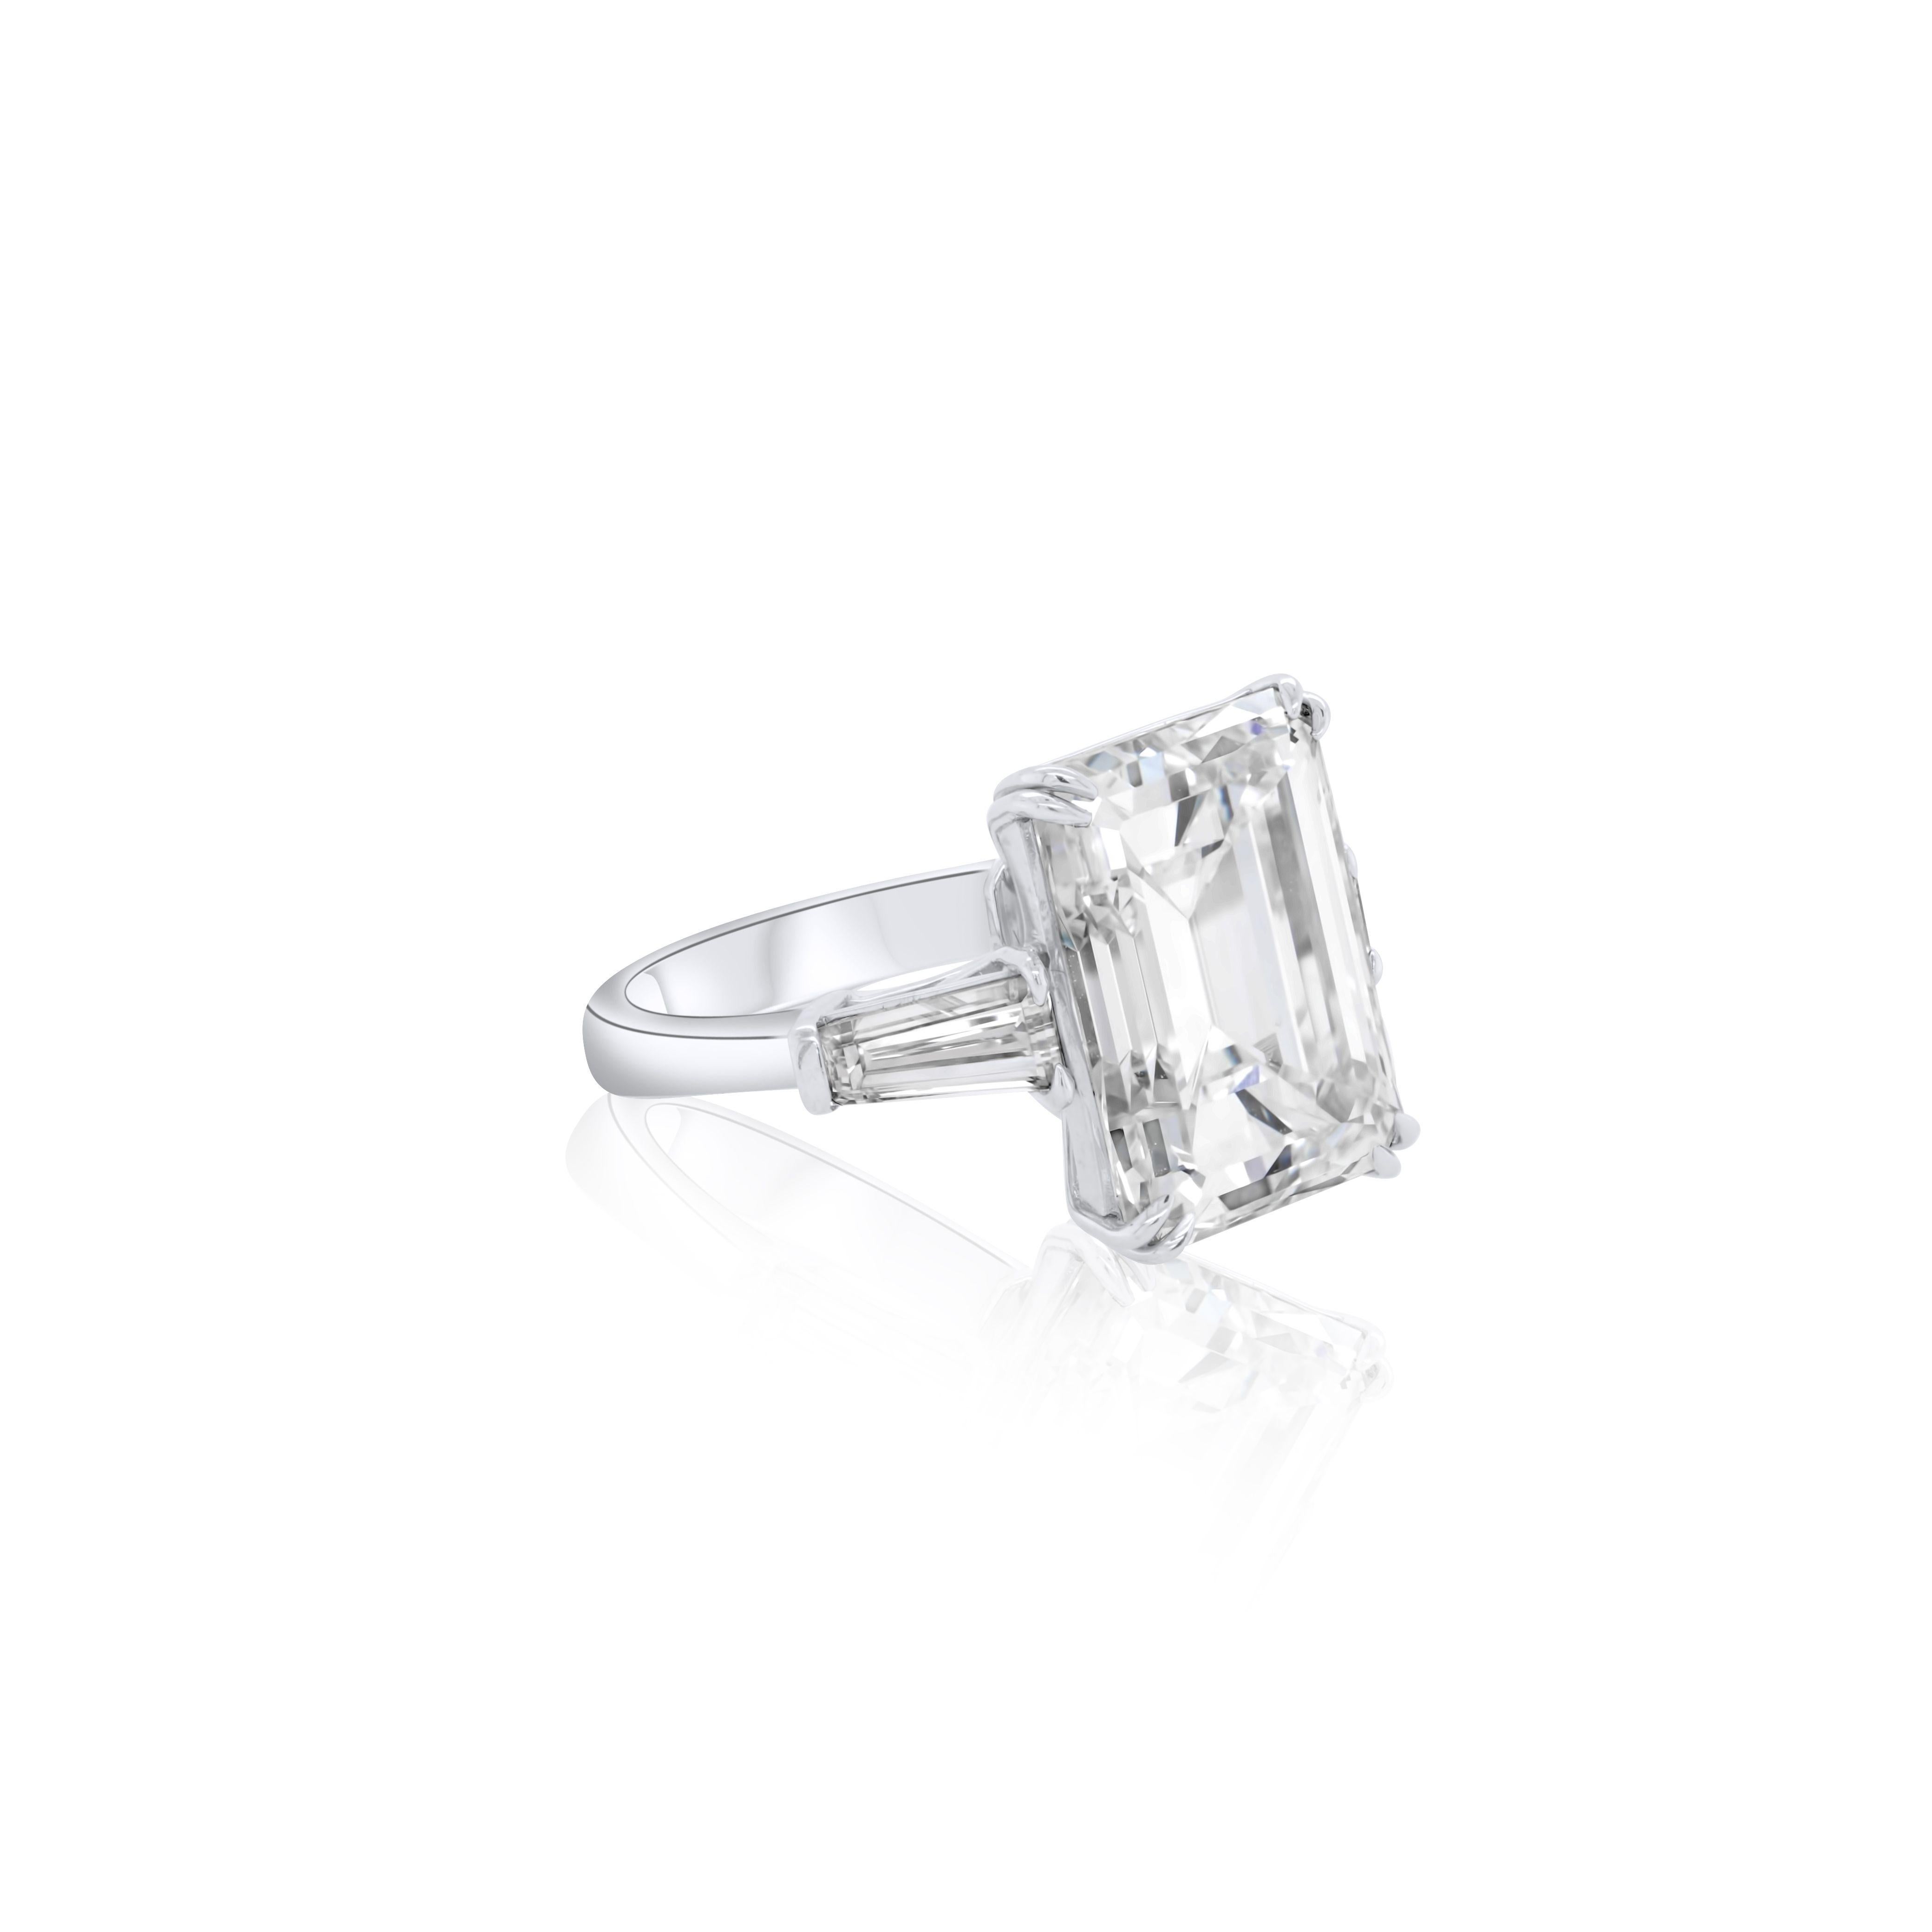 GIA Certified 11.34 Carat H-VS1 Emerald Cut Diamond Ring For Sale 2